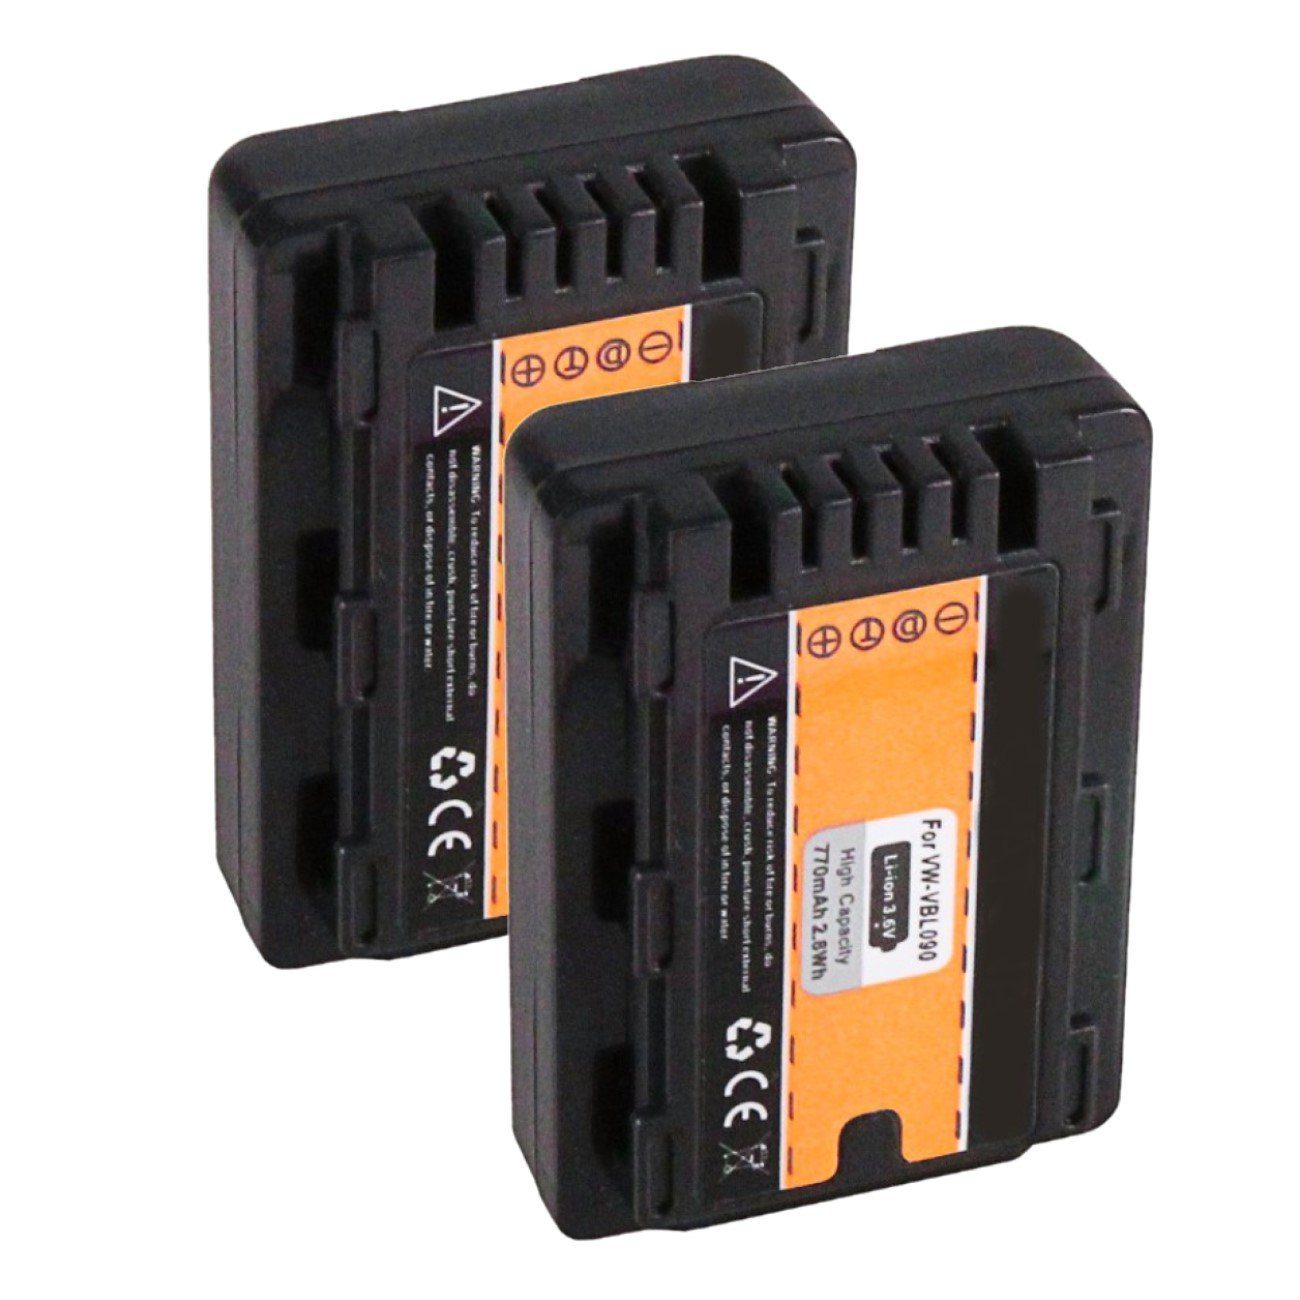 GOLDBATT 2x Akku für Panasonic HDC-SDX SDR-S50 S50A S50K S50N T50 T50S VW-VBL090E-K VBL090 Kamera-Akku Ersatzakku 770 mAh (3,6 V, 2 St), 100% kompatibel mit den Original Akkus durch maßgefertigte Passform inklusive Überhitzungsschutz | Akkus und PowerBanks